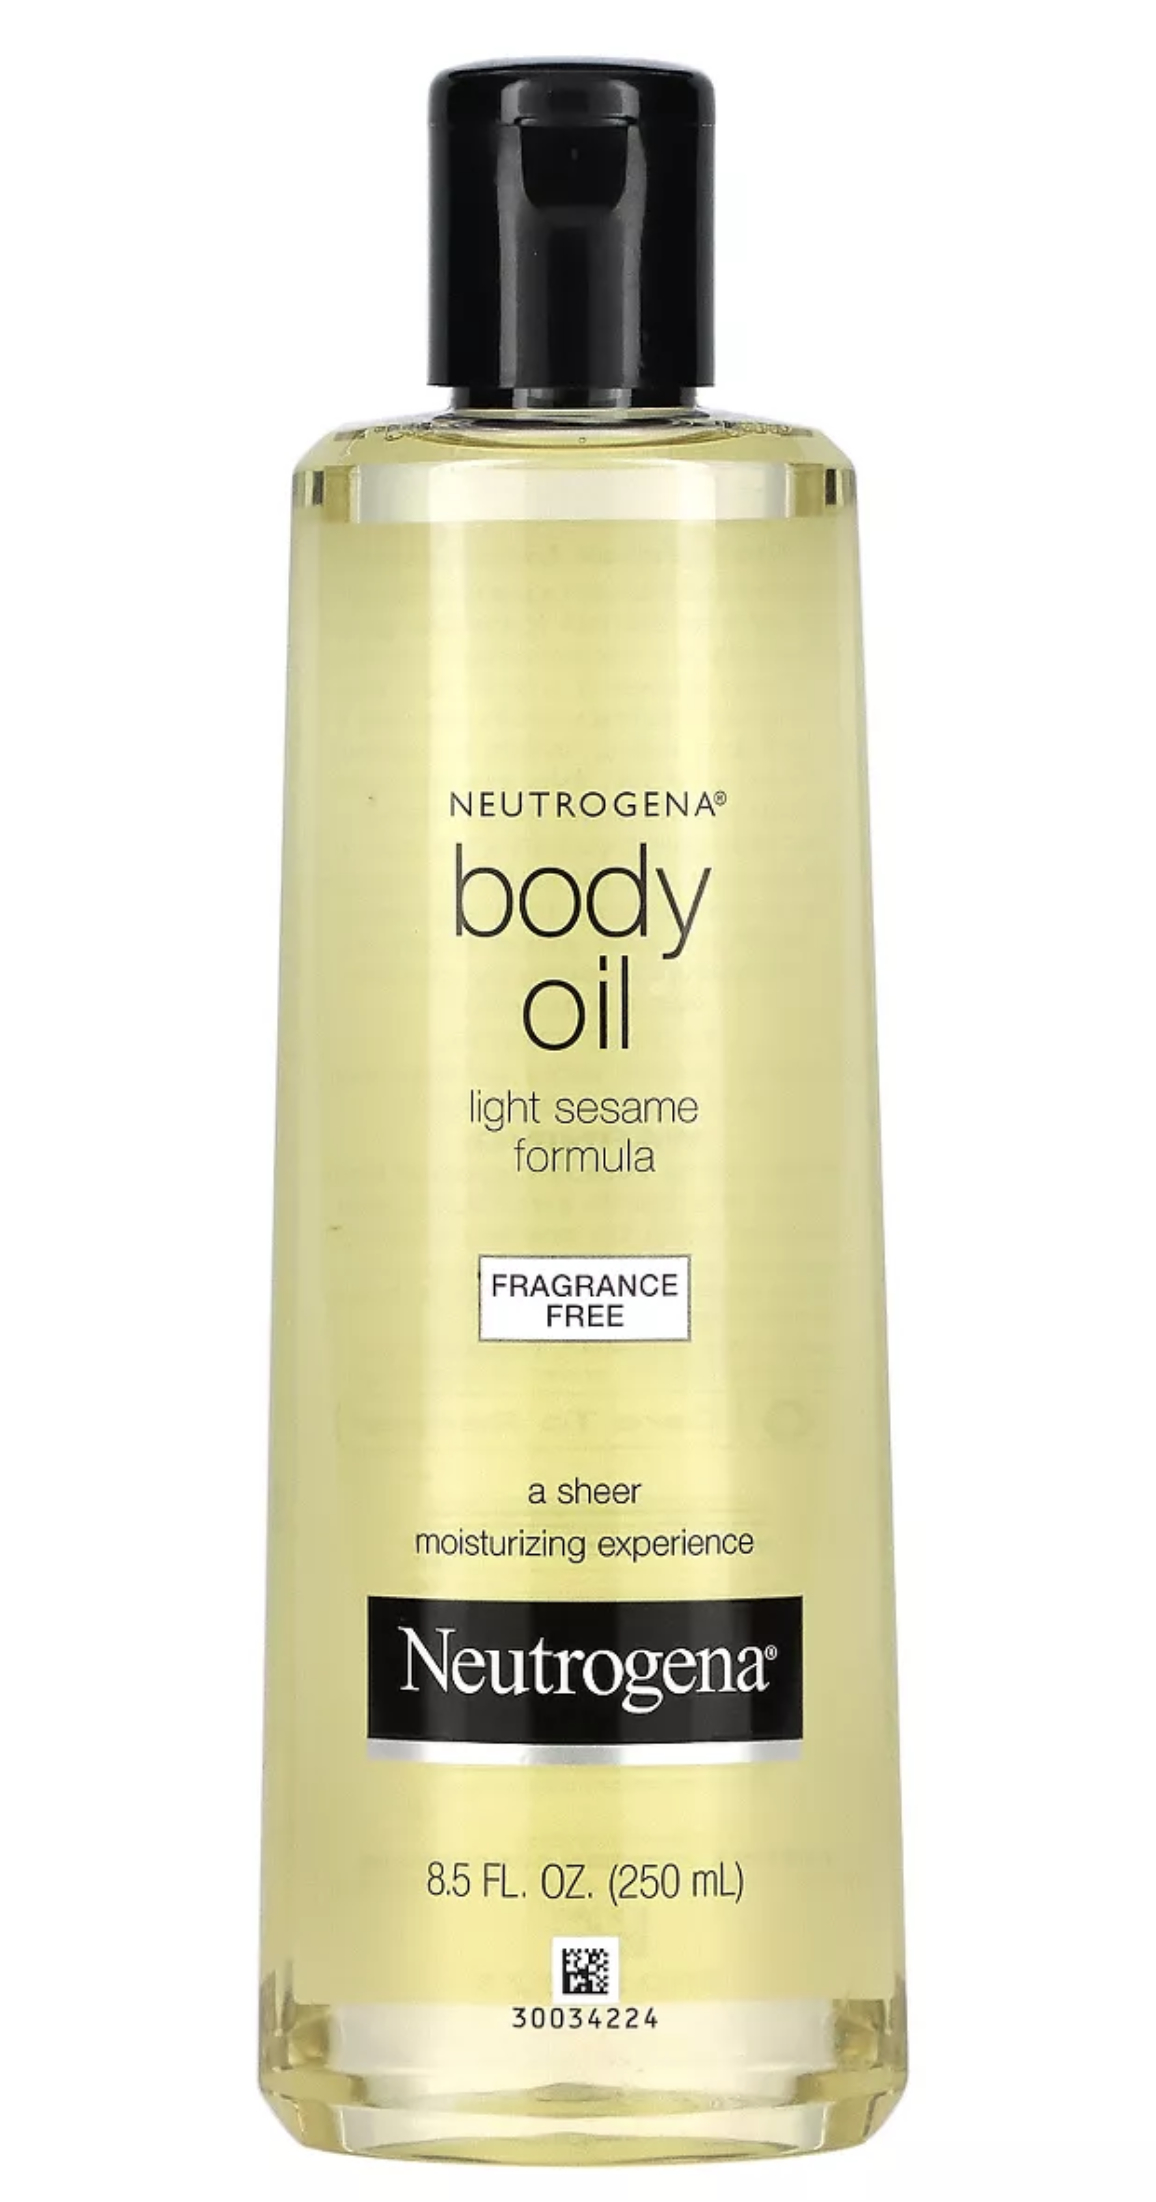 Neutrogena Body Oil bottle